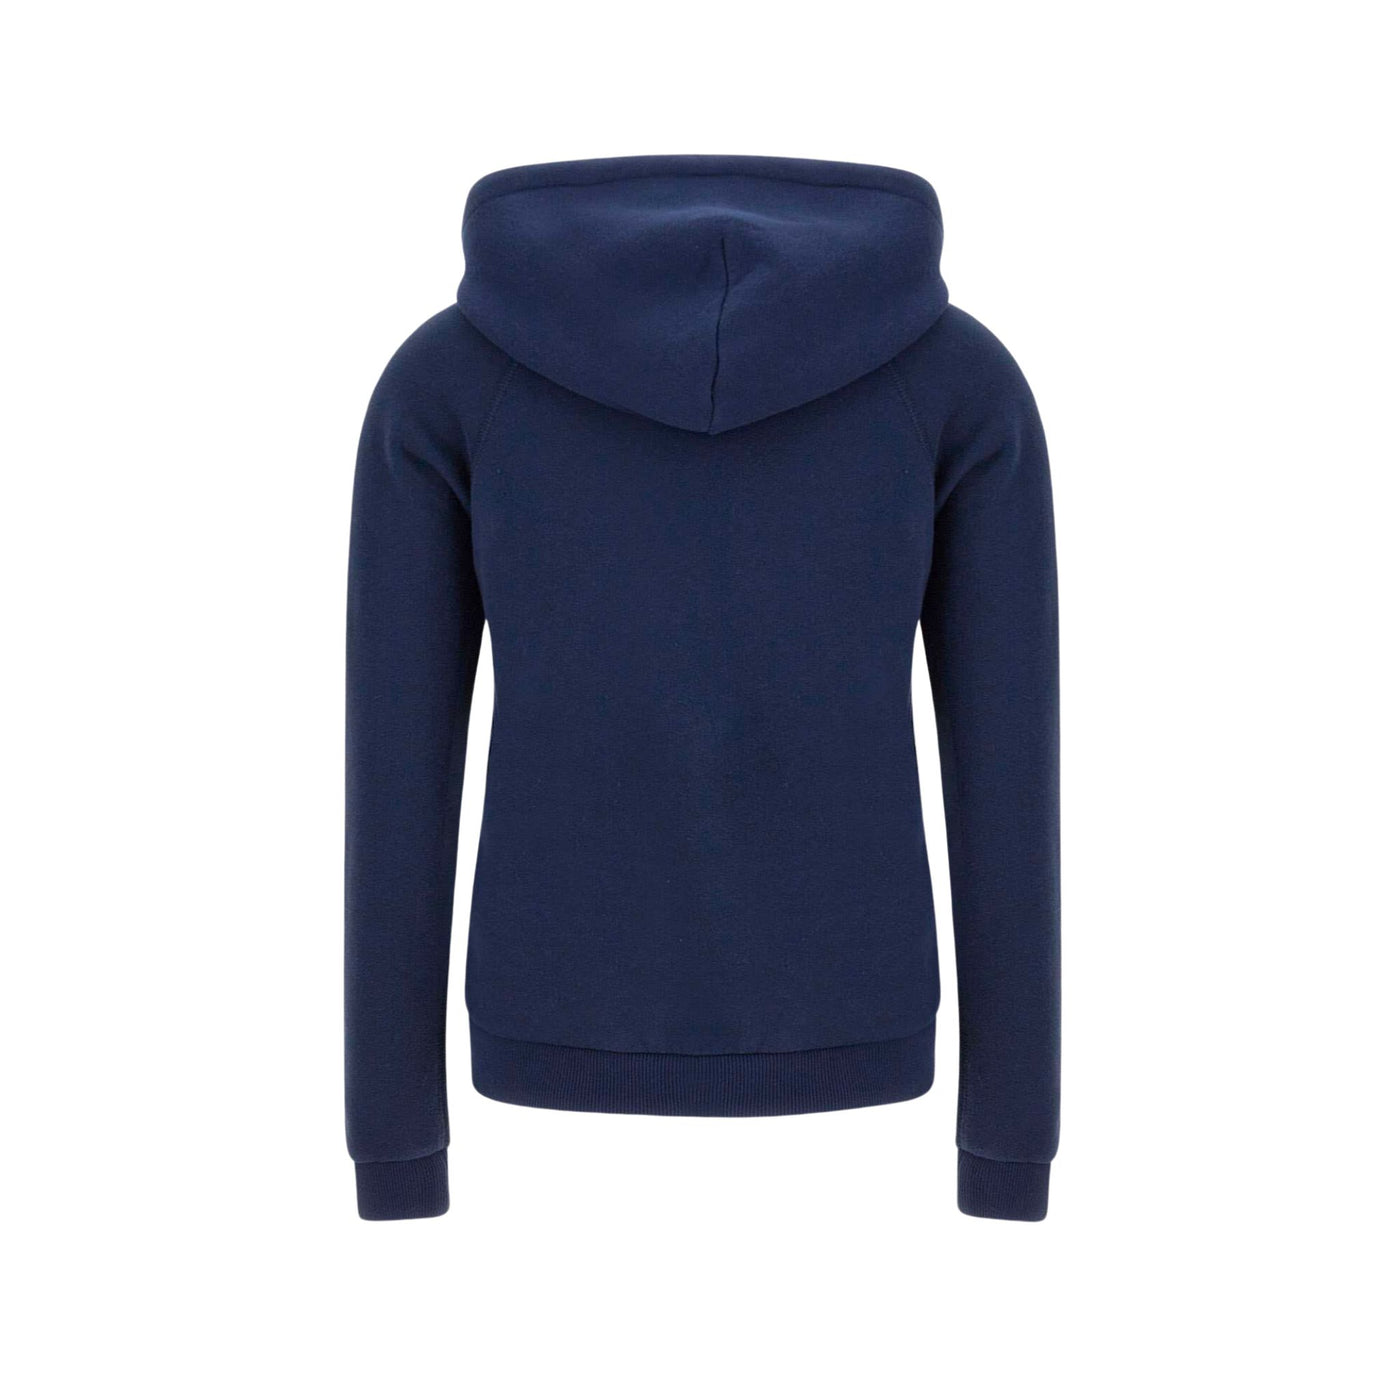 Women's sweatshirt with blue hood